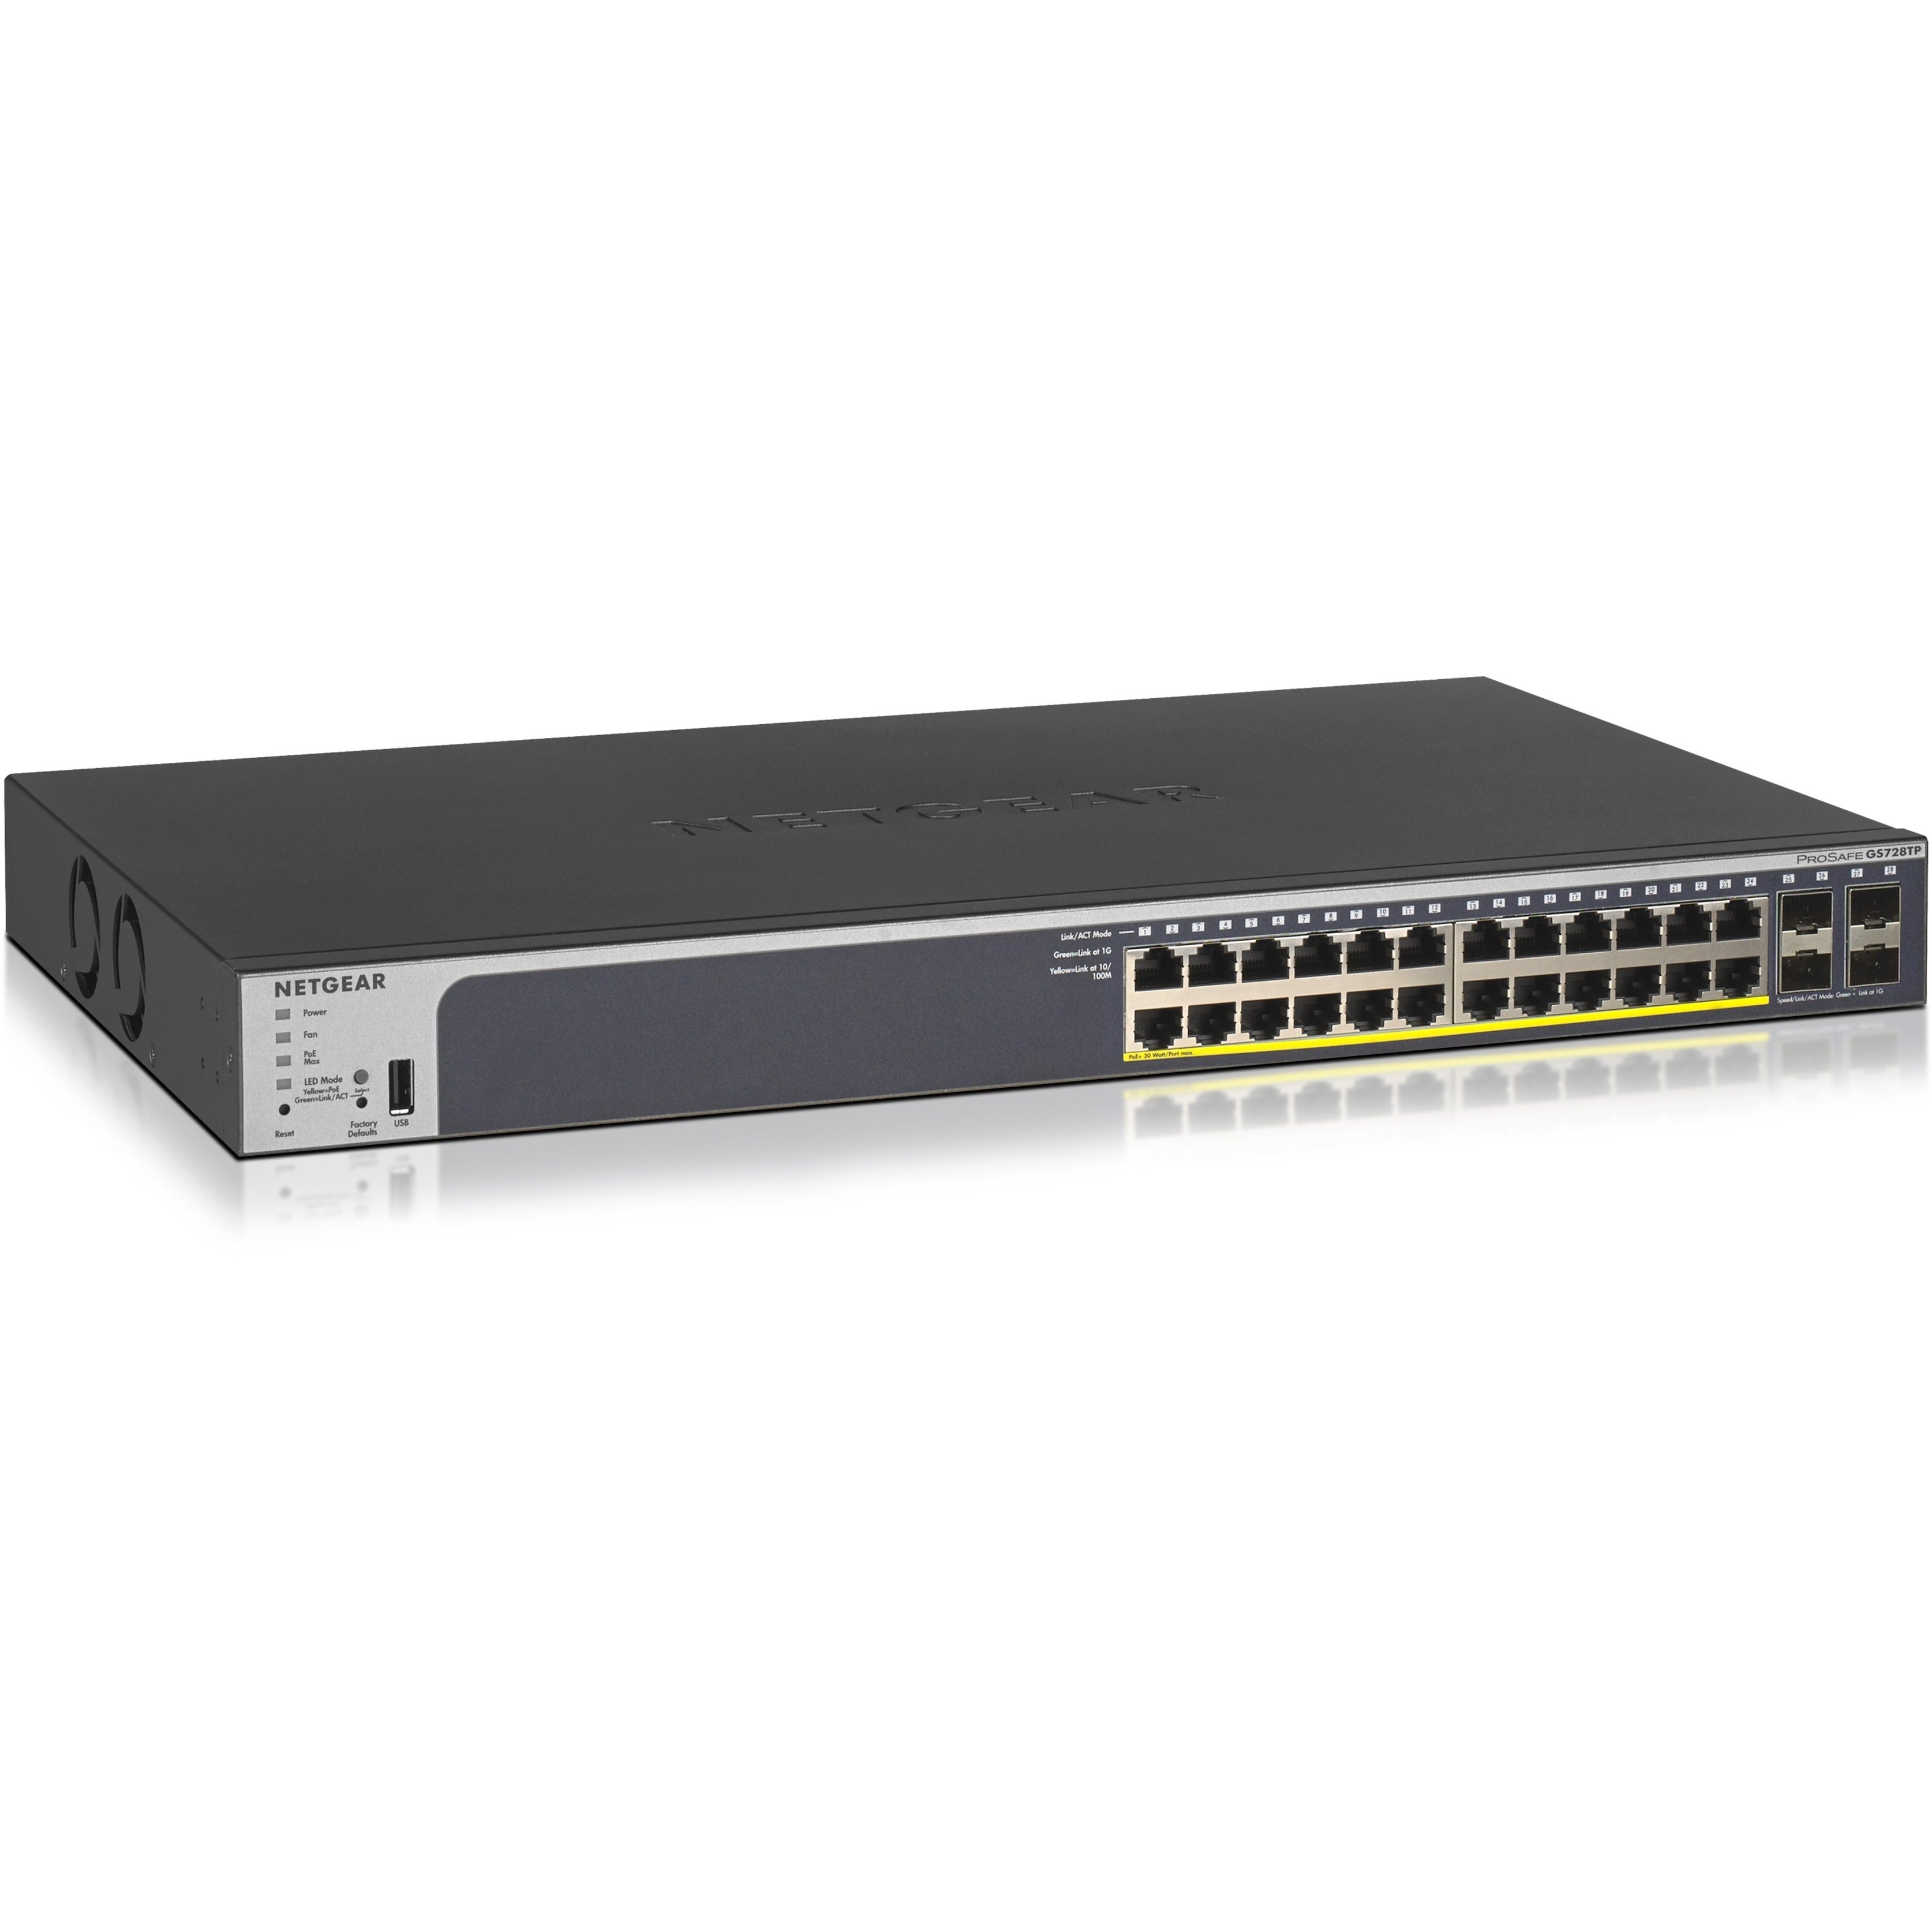 Netgear GS728TP-200NAS ProSafe GS728TP Ethernet Switch, 24-Port Gigabit, Power over Ethernet (PoE), Lifetime Warranty